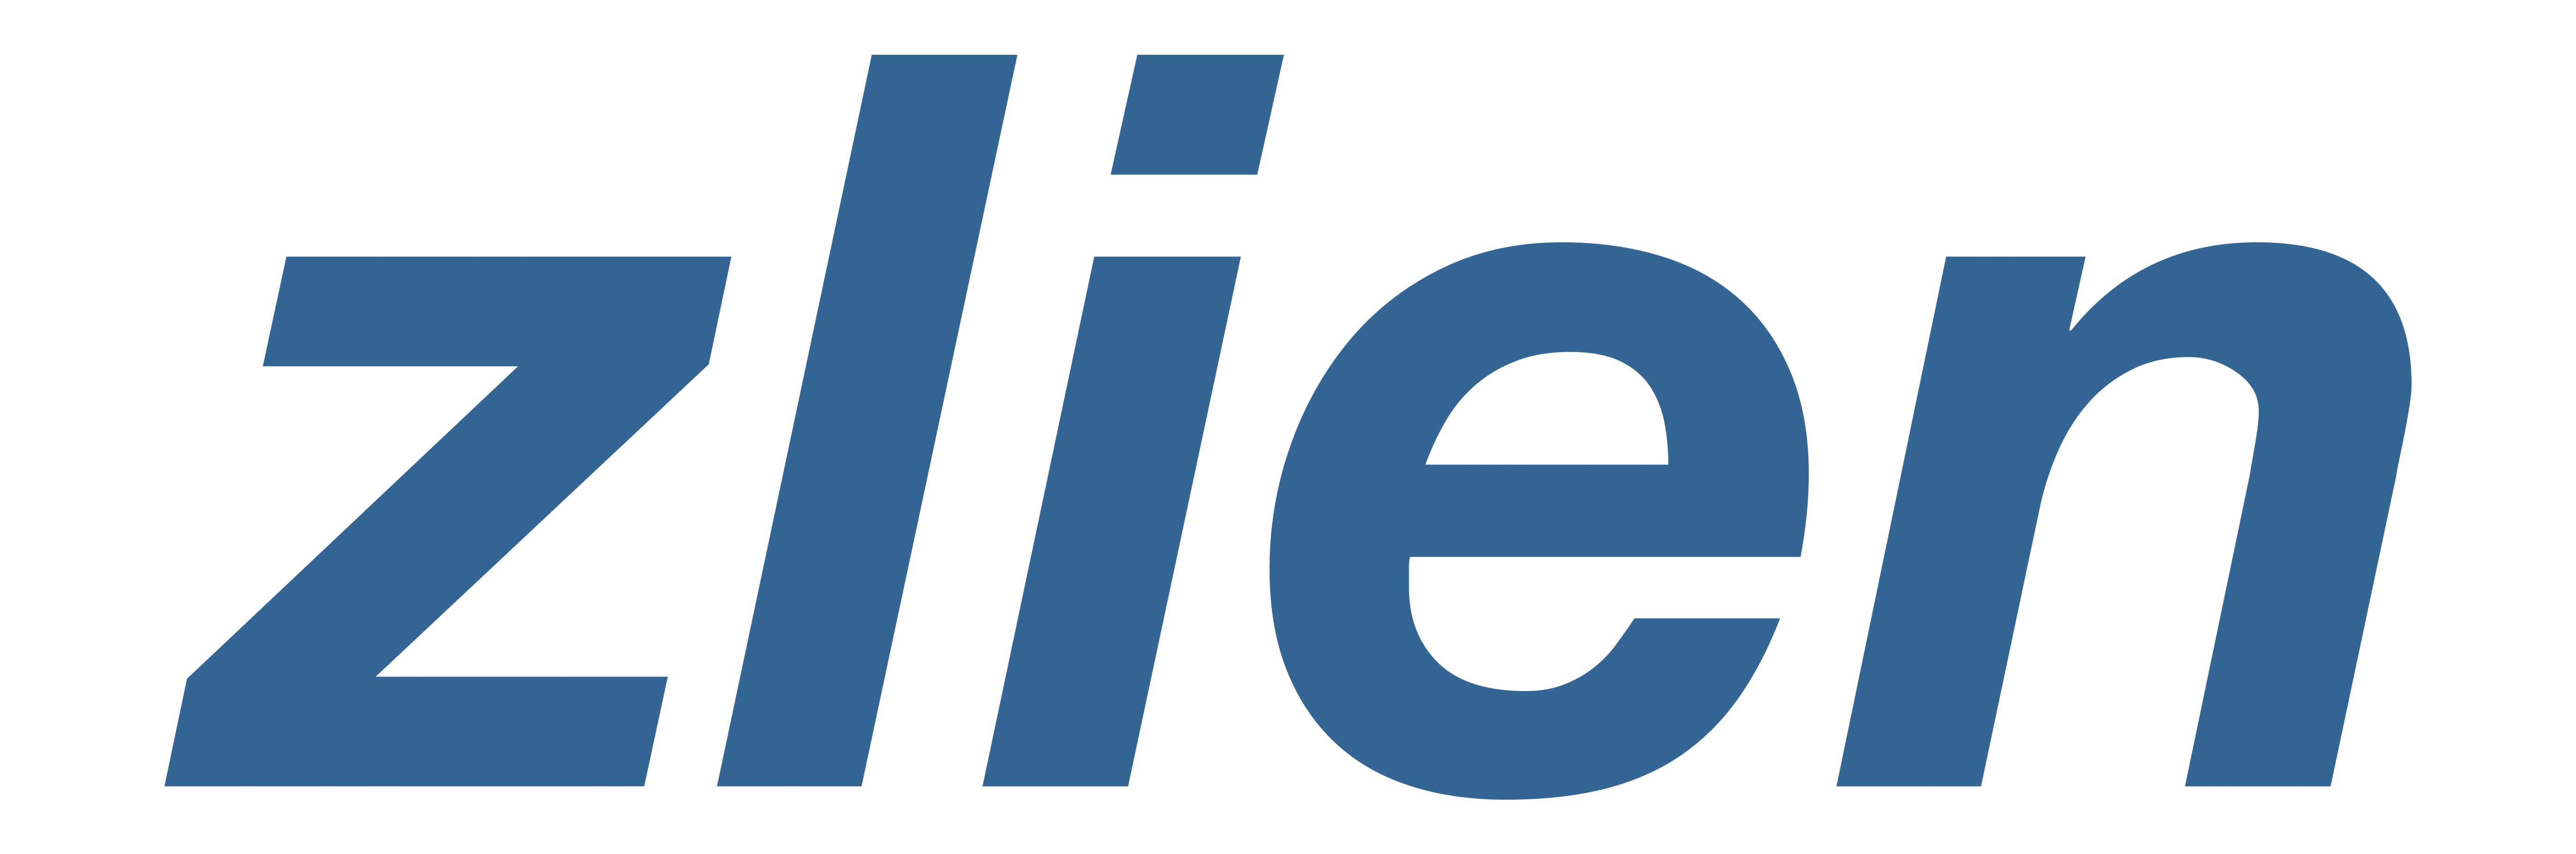 Primary_Logo_Blue-1